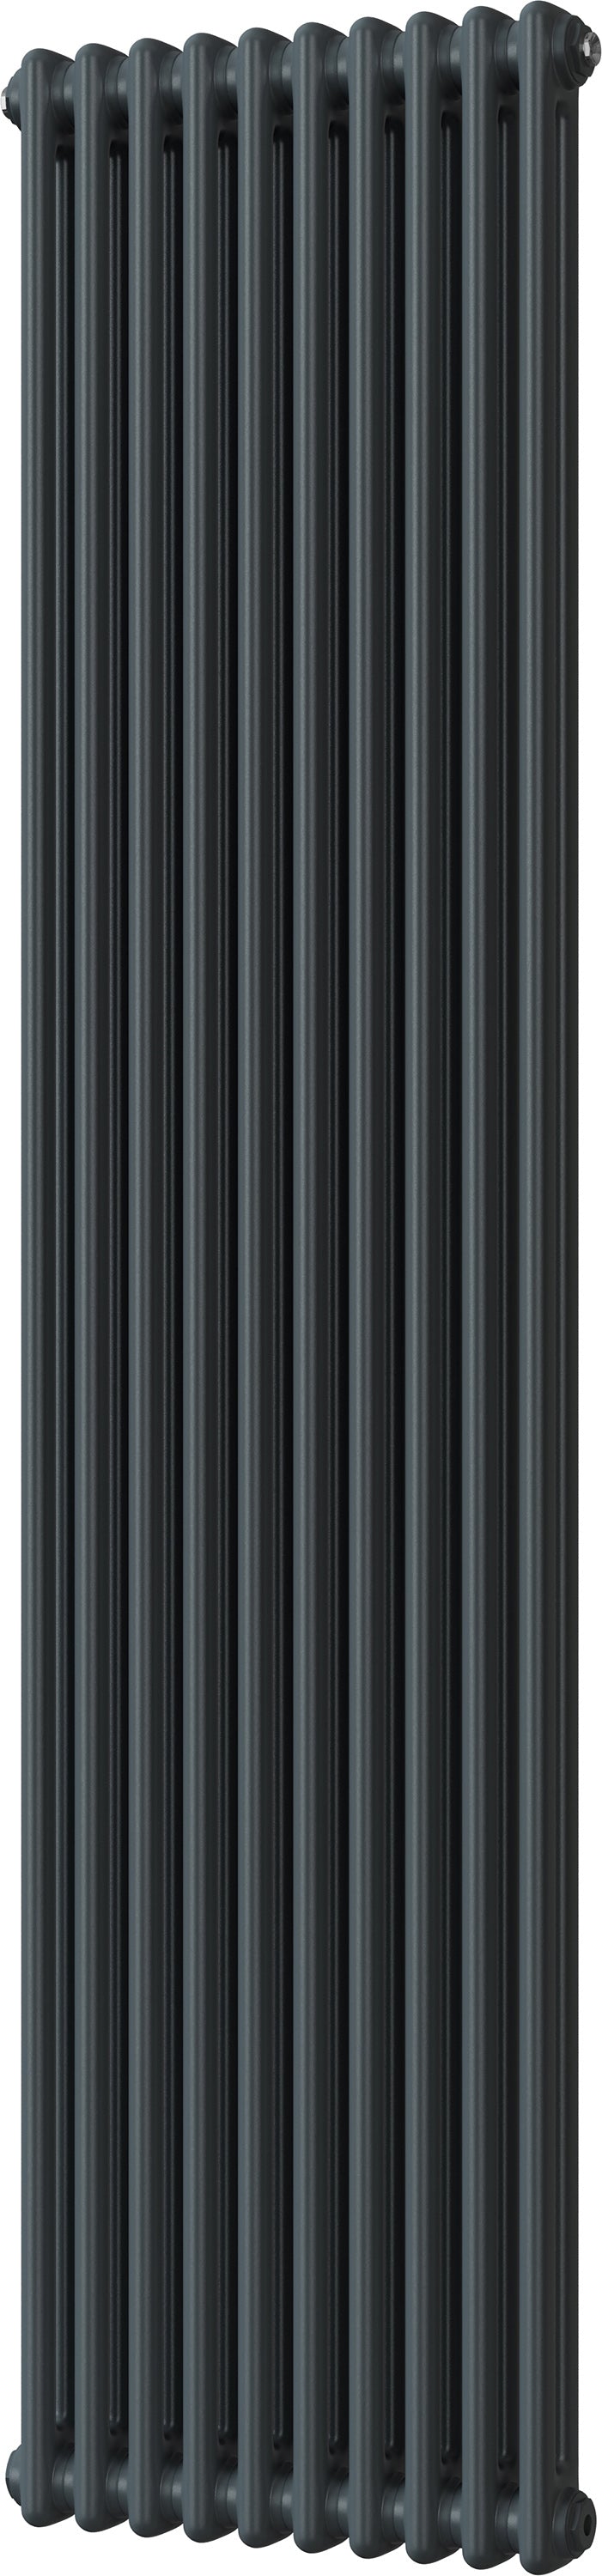 Alpha - Anthracite Vertical Column Radiator H1800mm x W460mm 2 Column